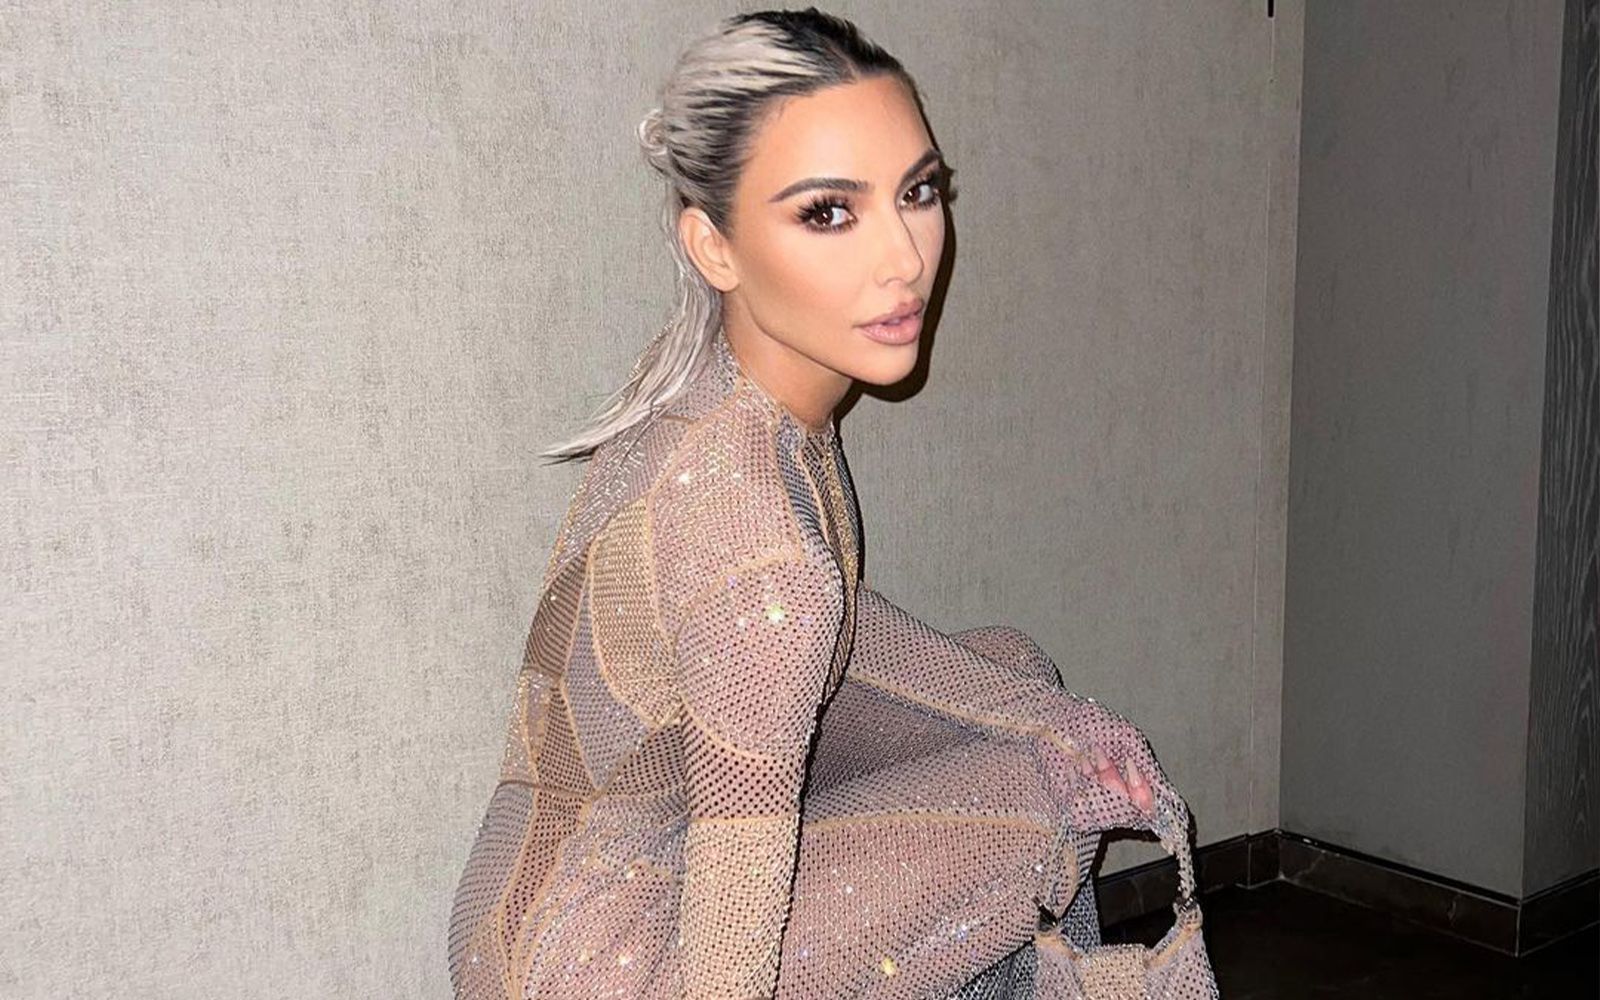 SKIMS - Made to sculpt, tone, and enhance, Kim Kardashian West